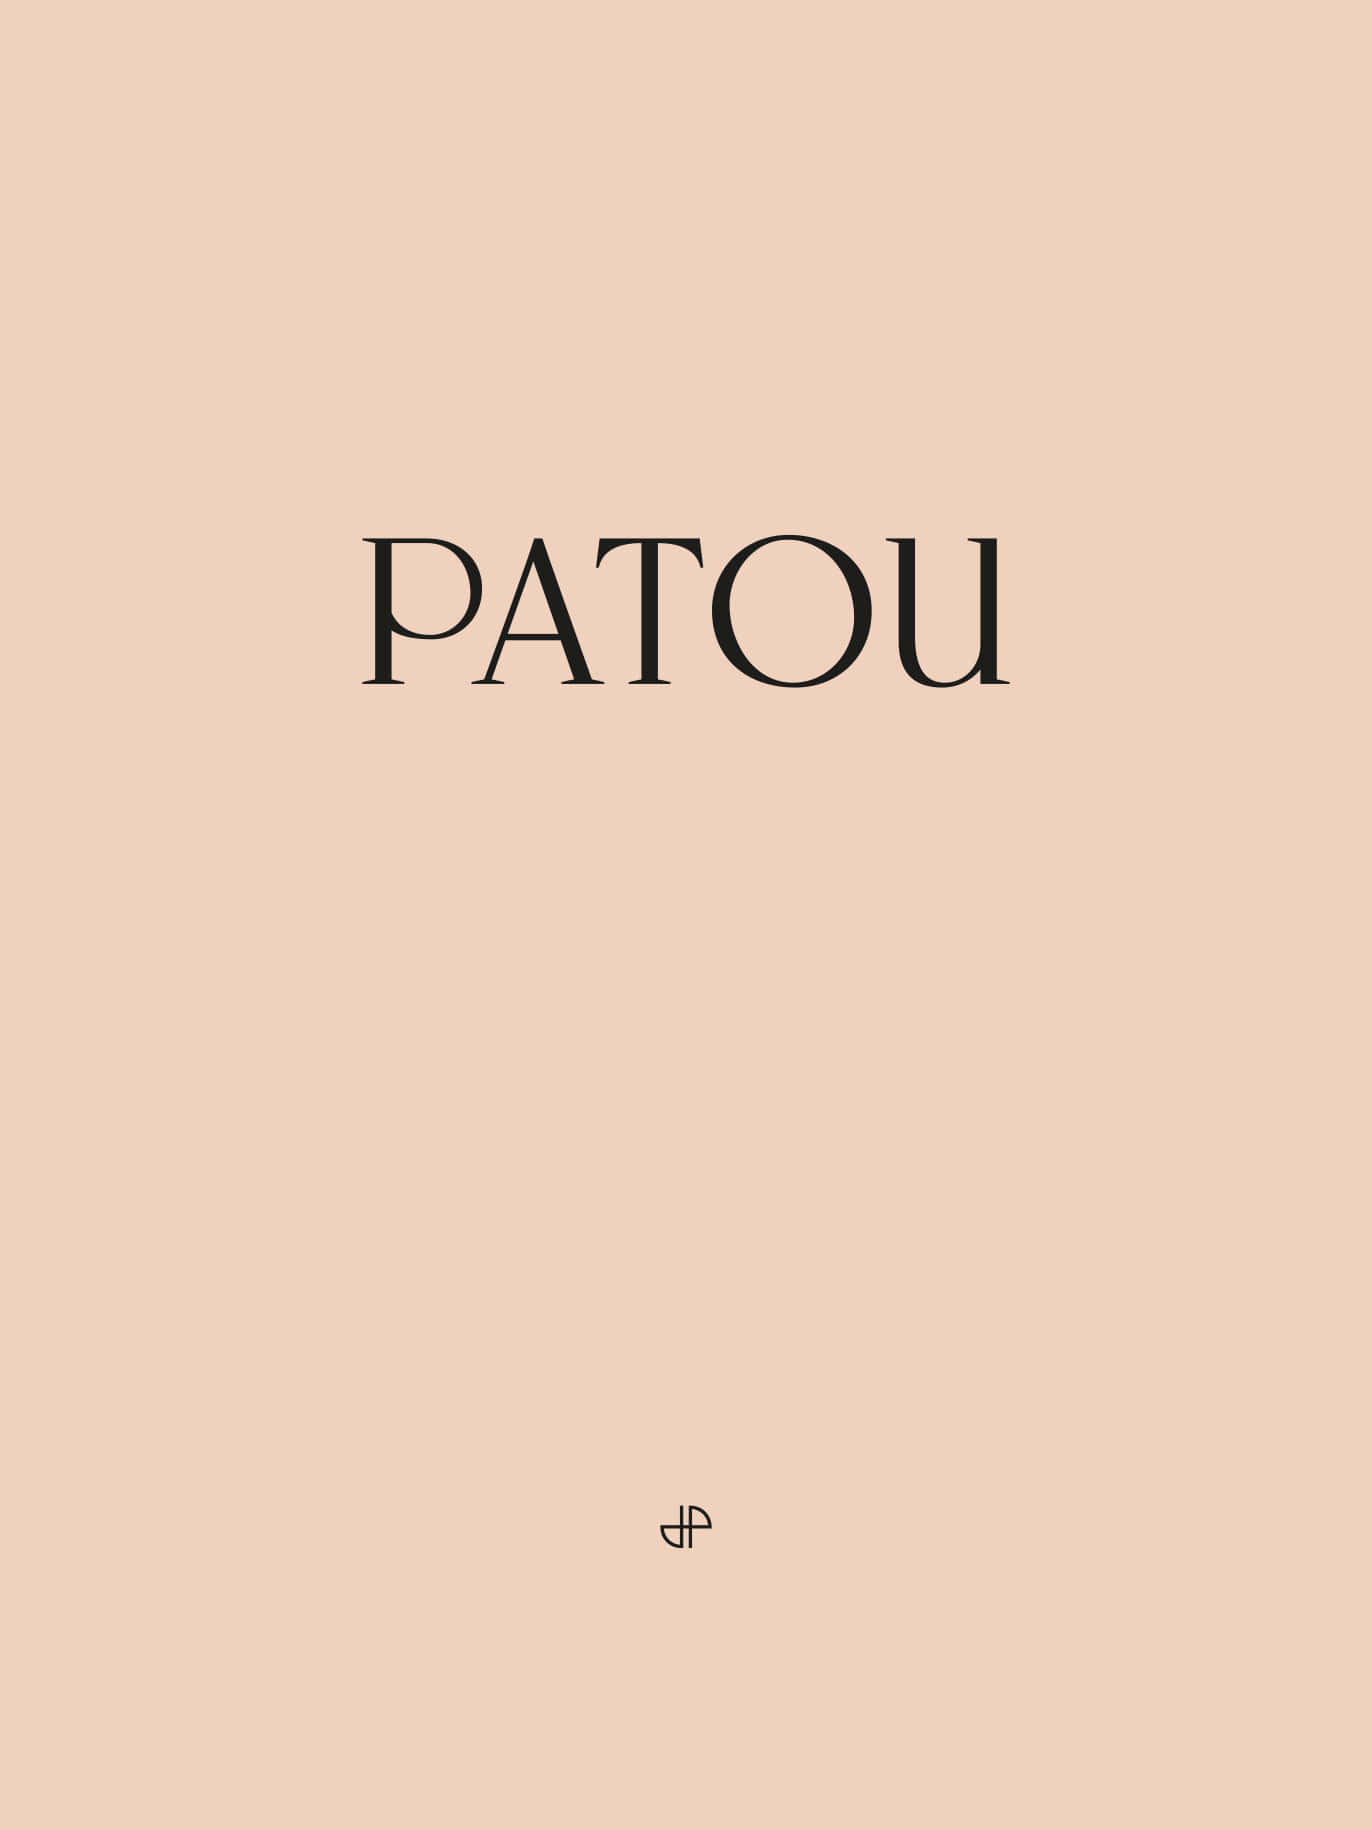 Patou Wordmark In Pastel Backdrop Wallpaper